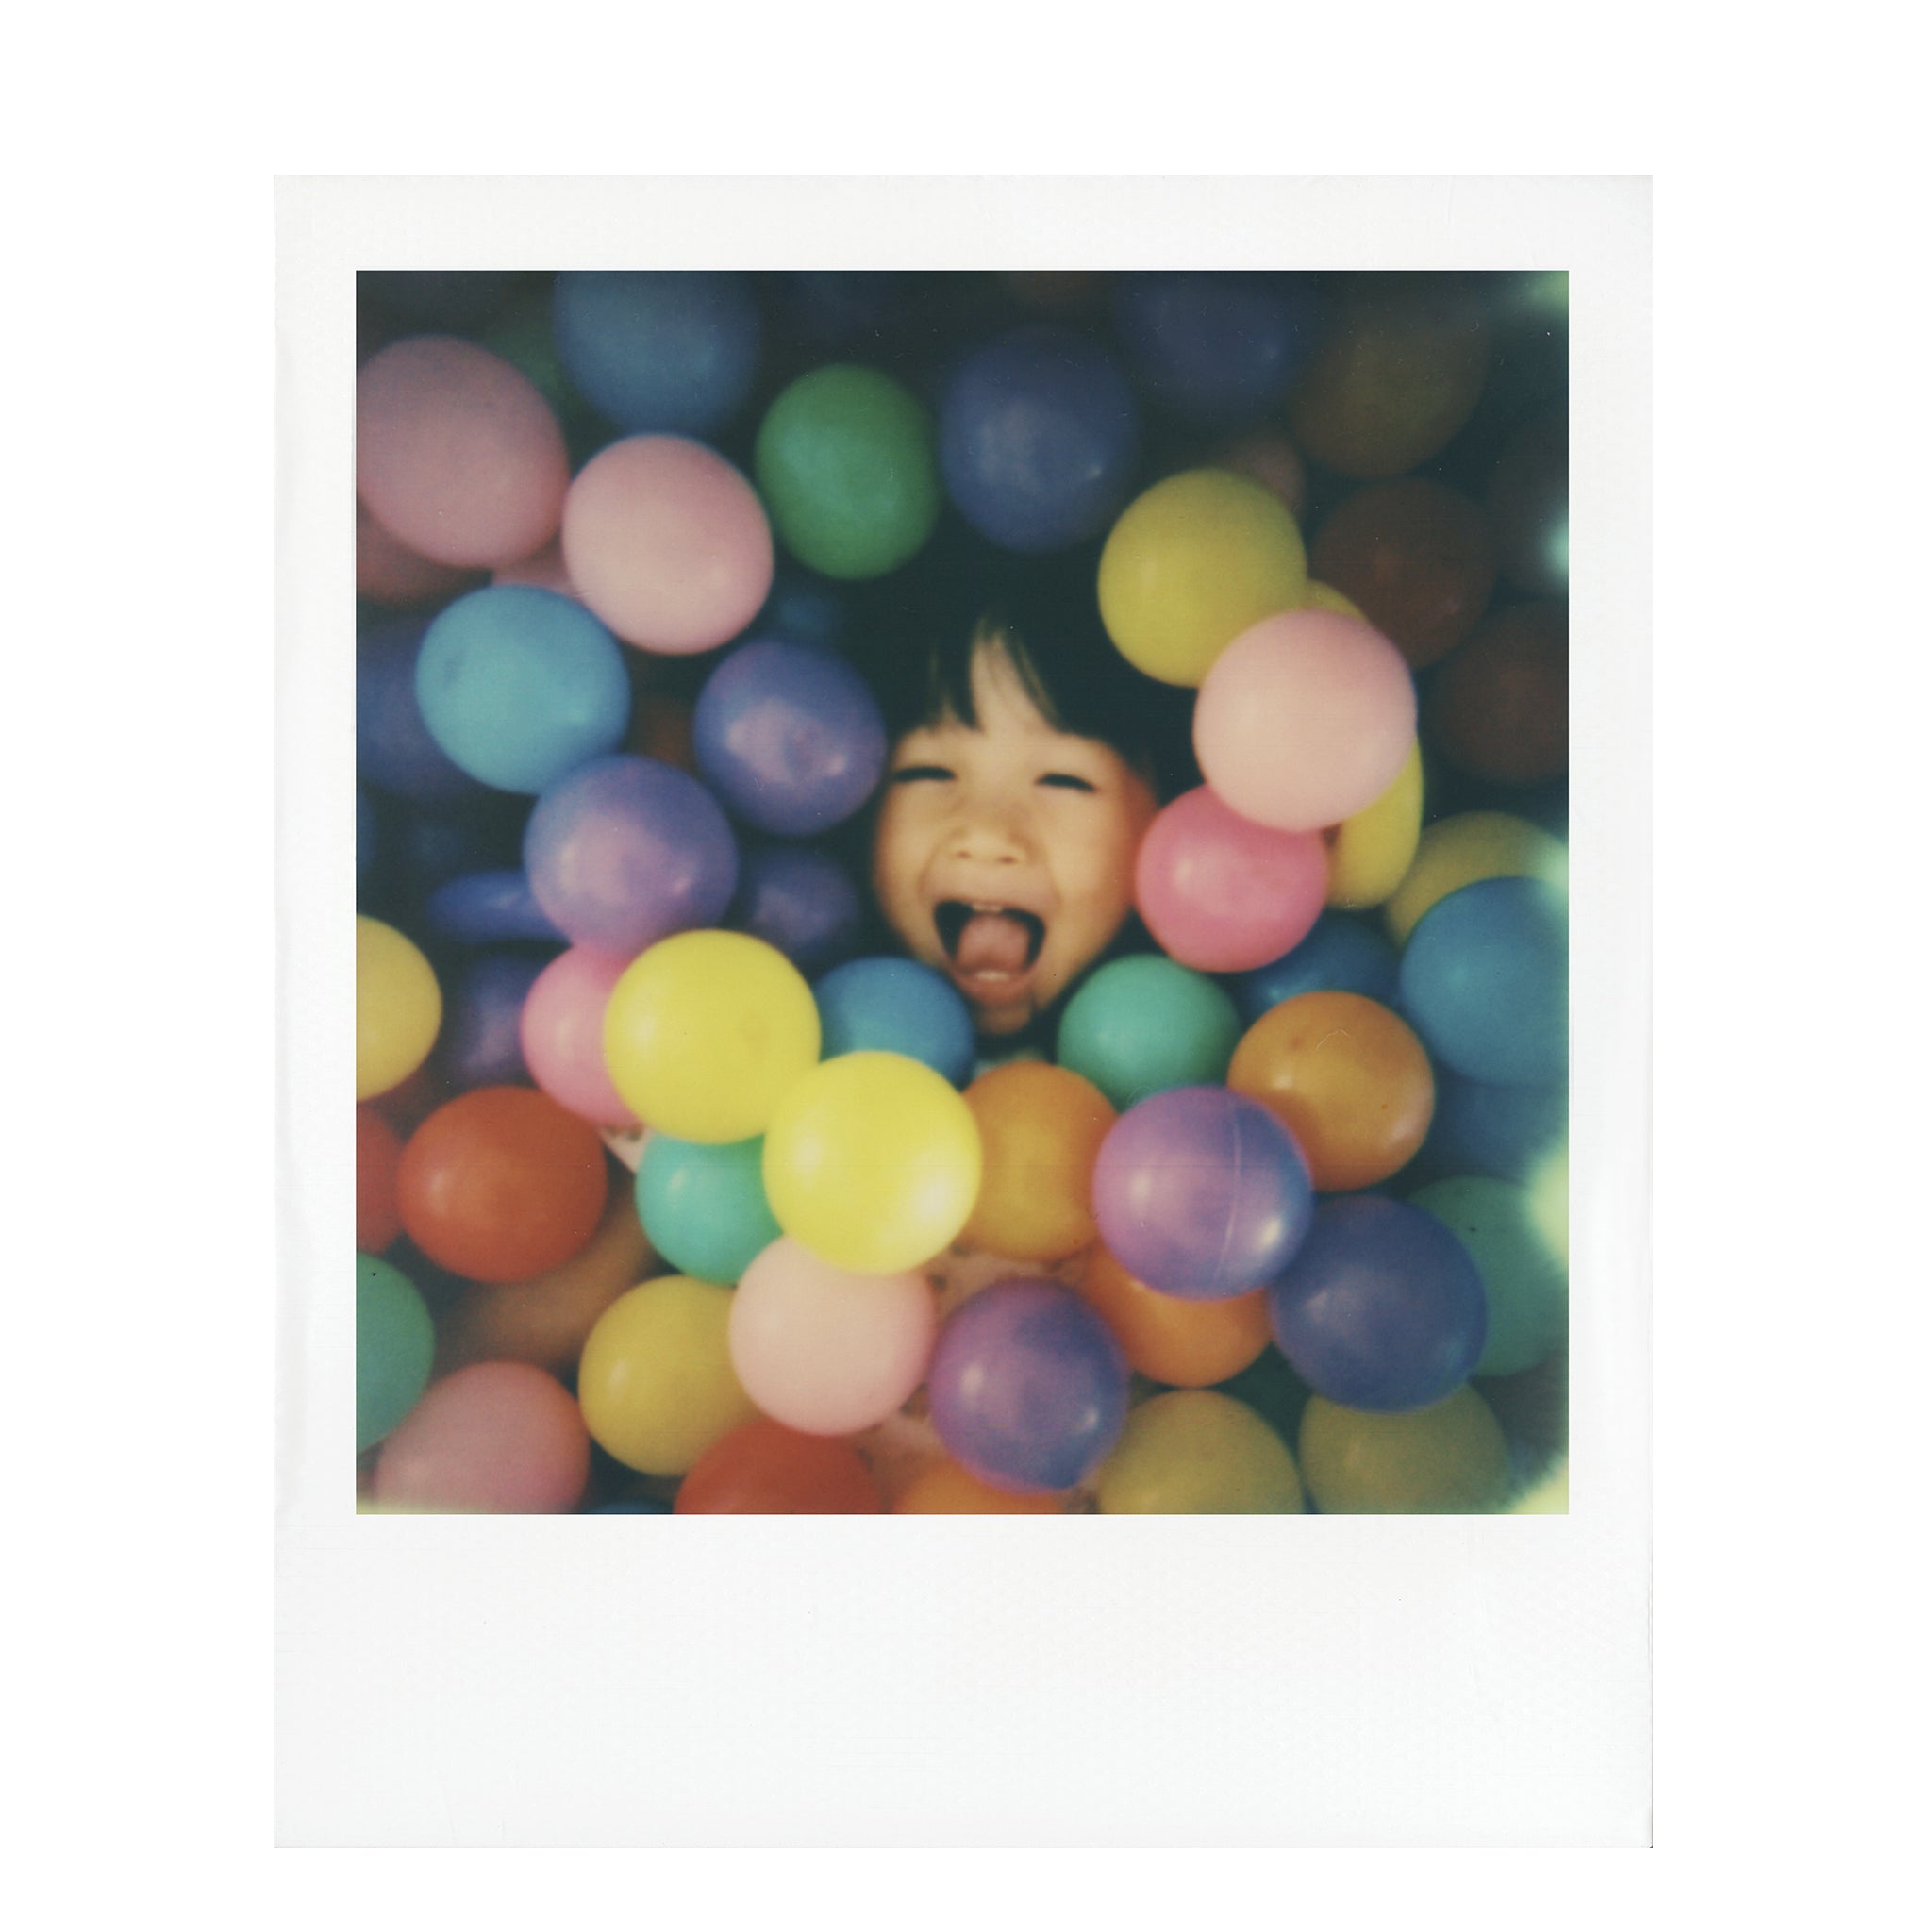 Polaroid Color 600 Film 白框 (6002)